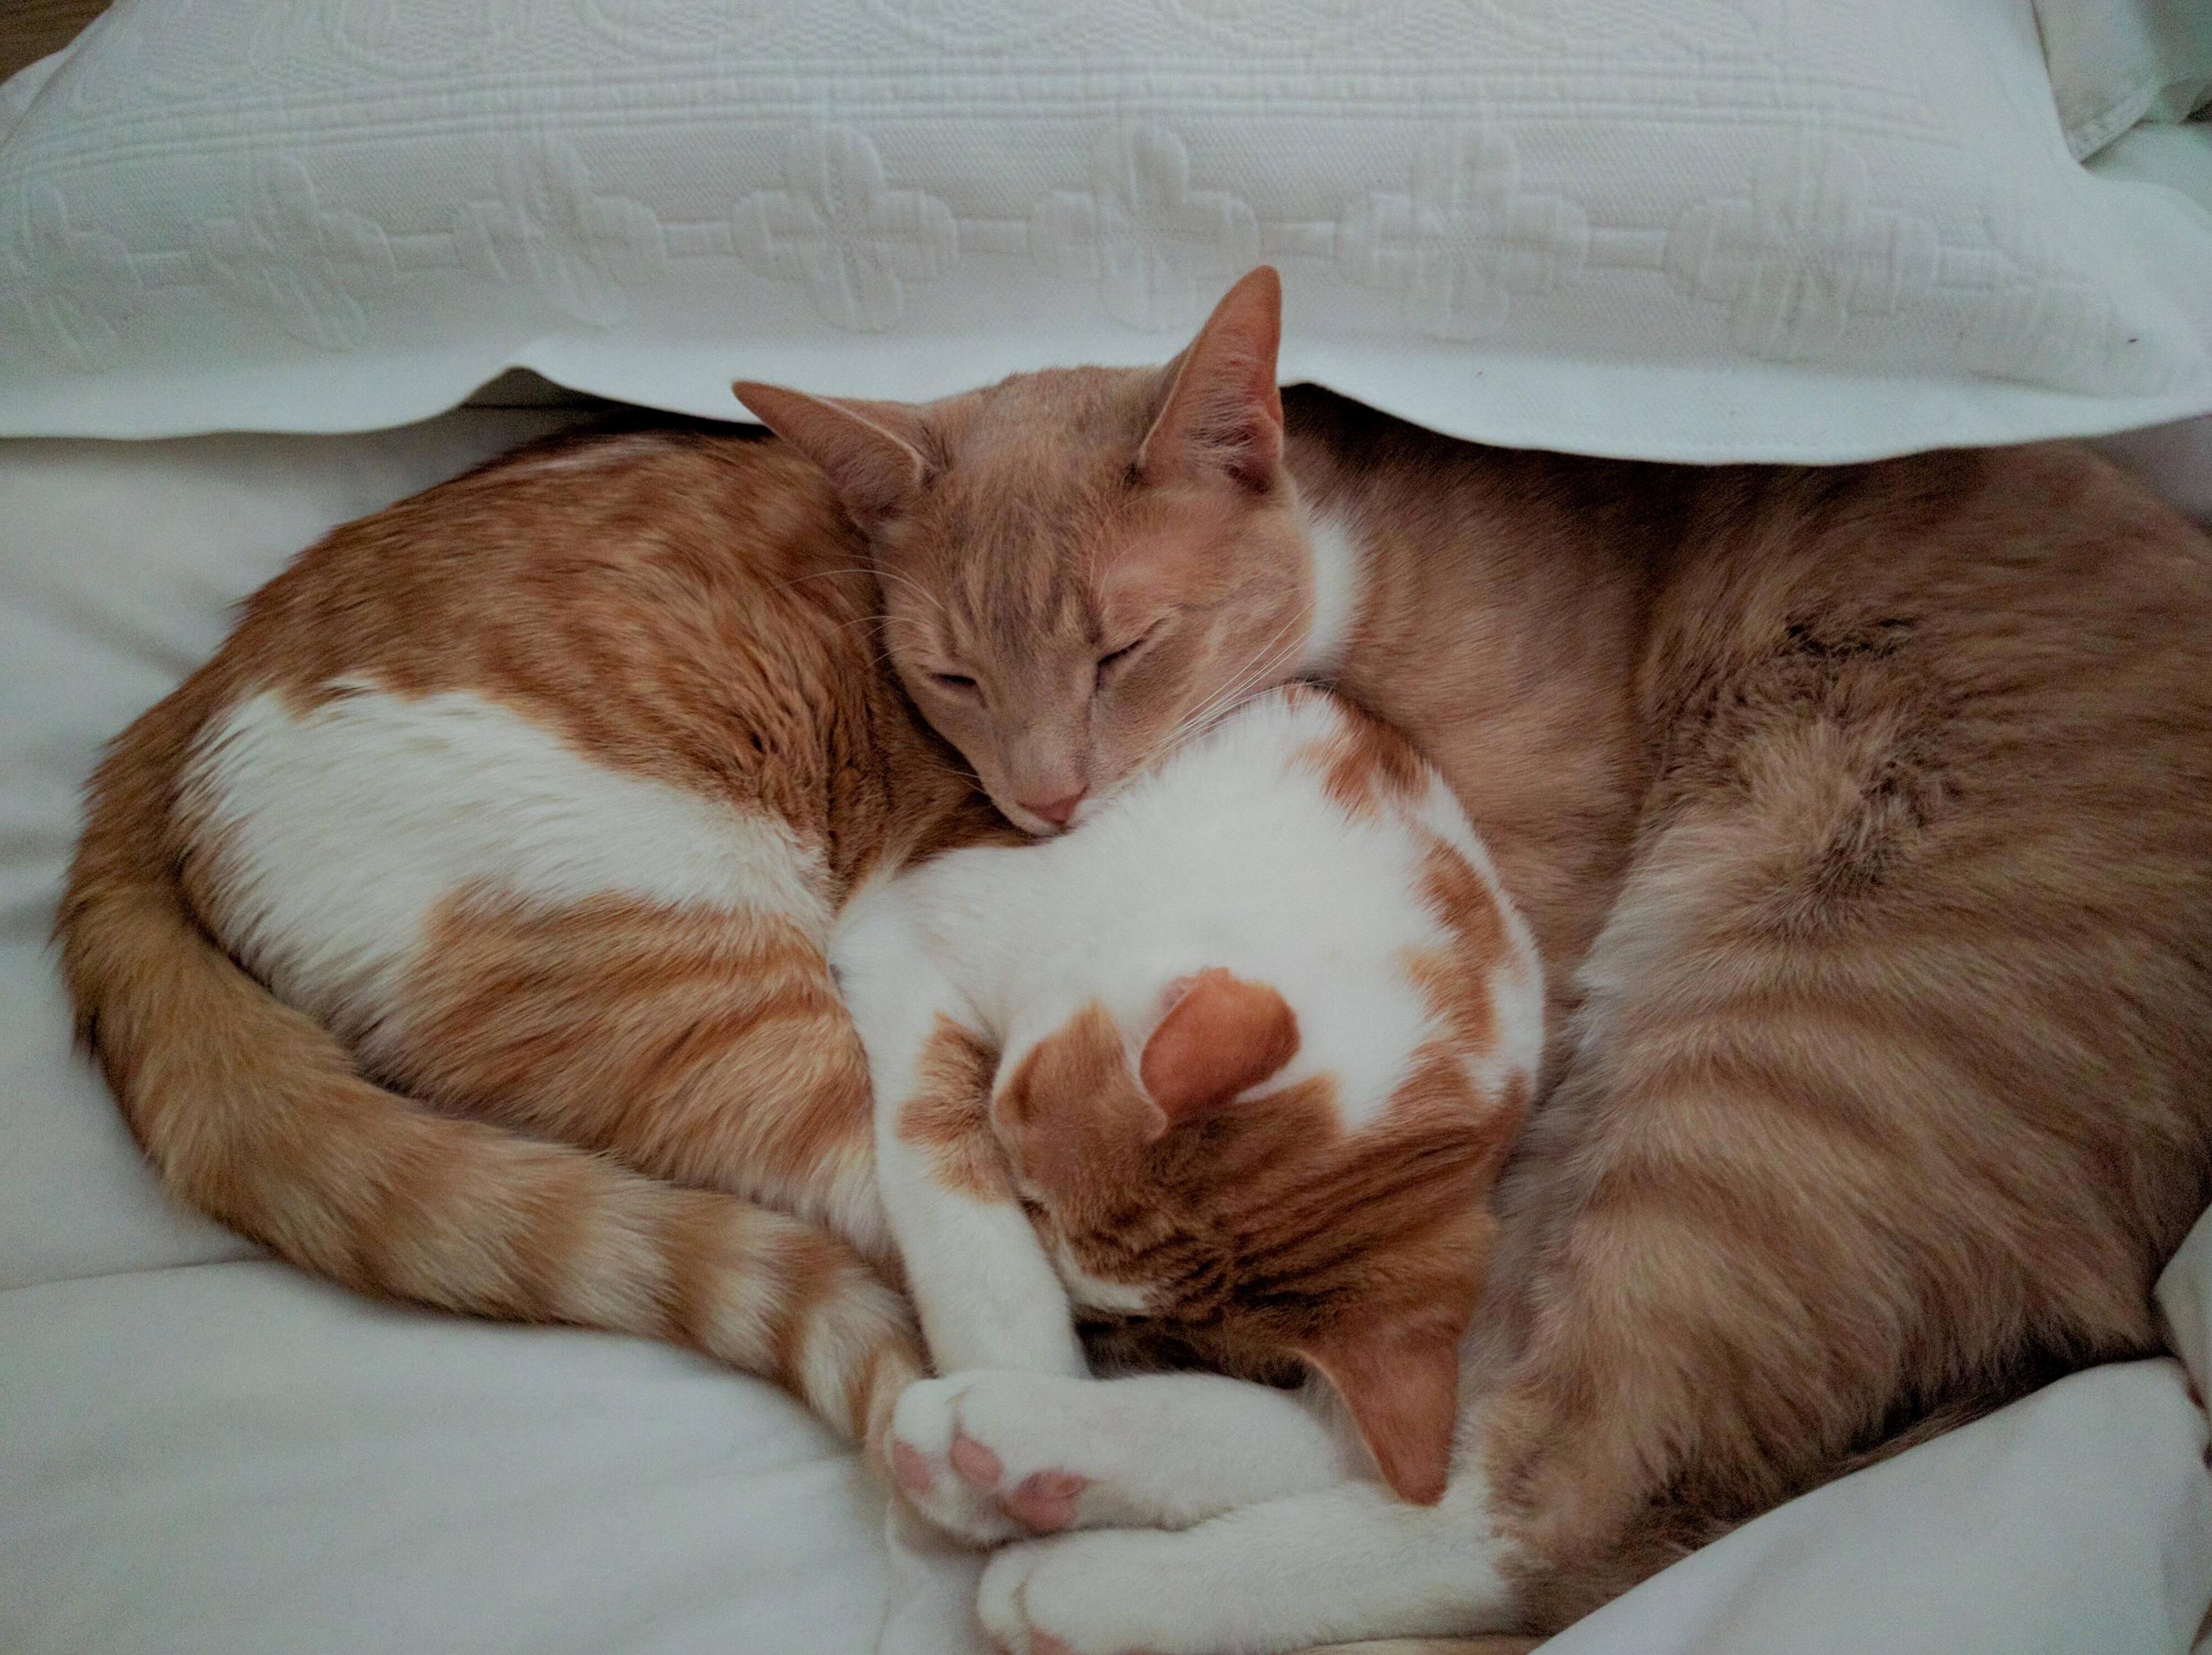 Snuggle buddies